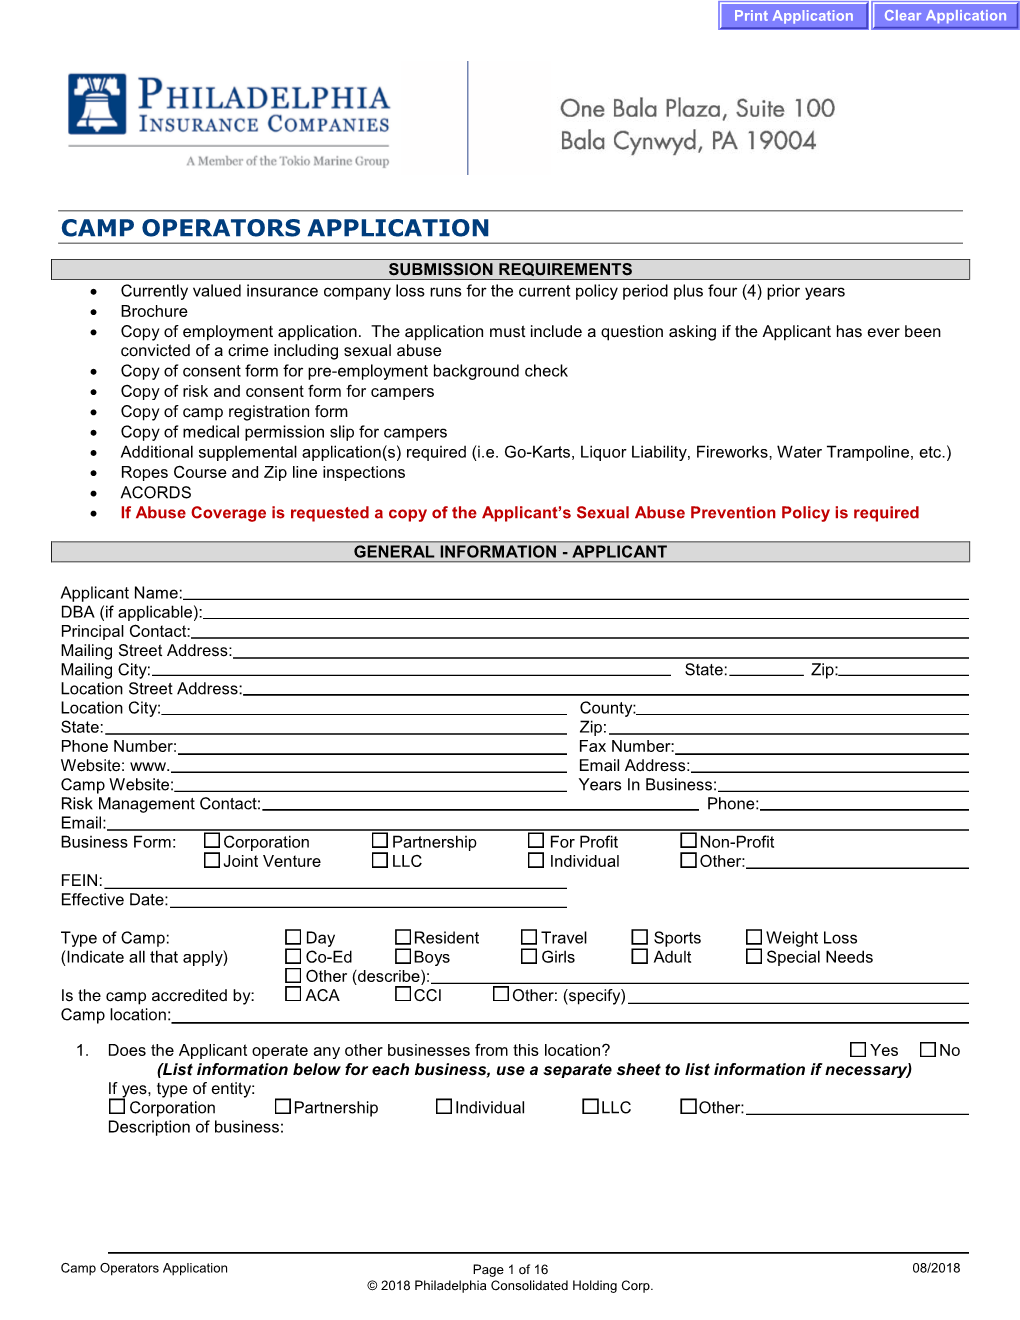 Camp Operators Applicationinternallink